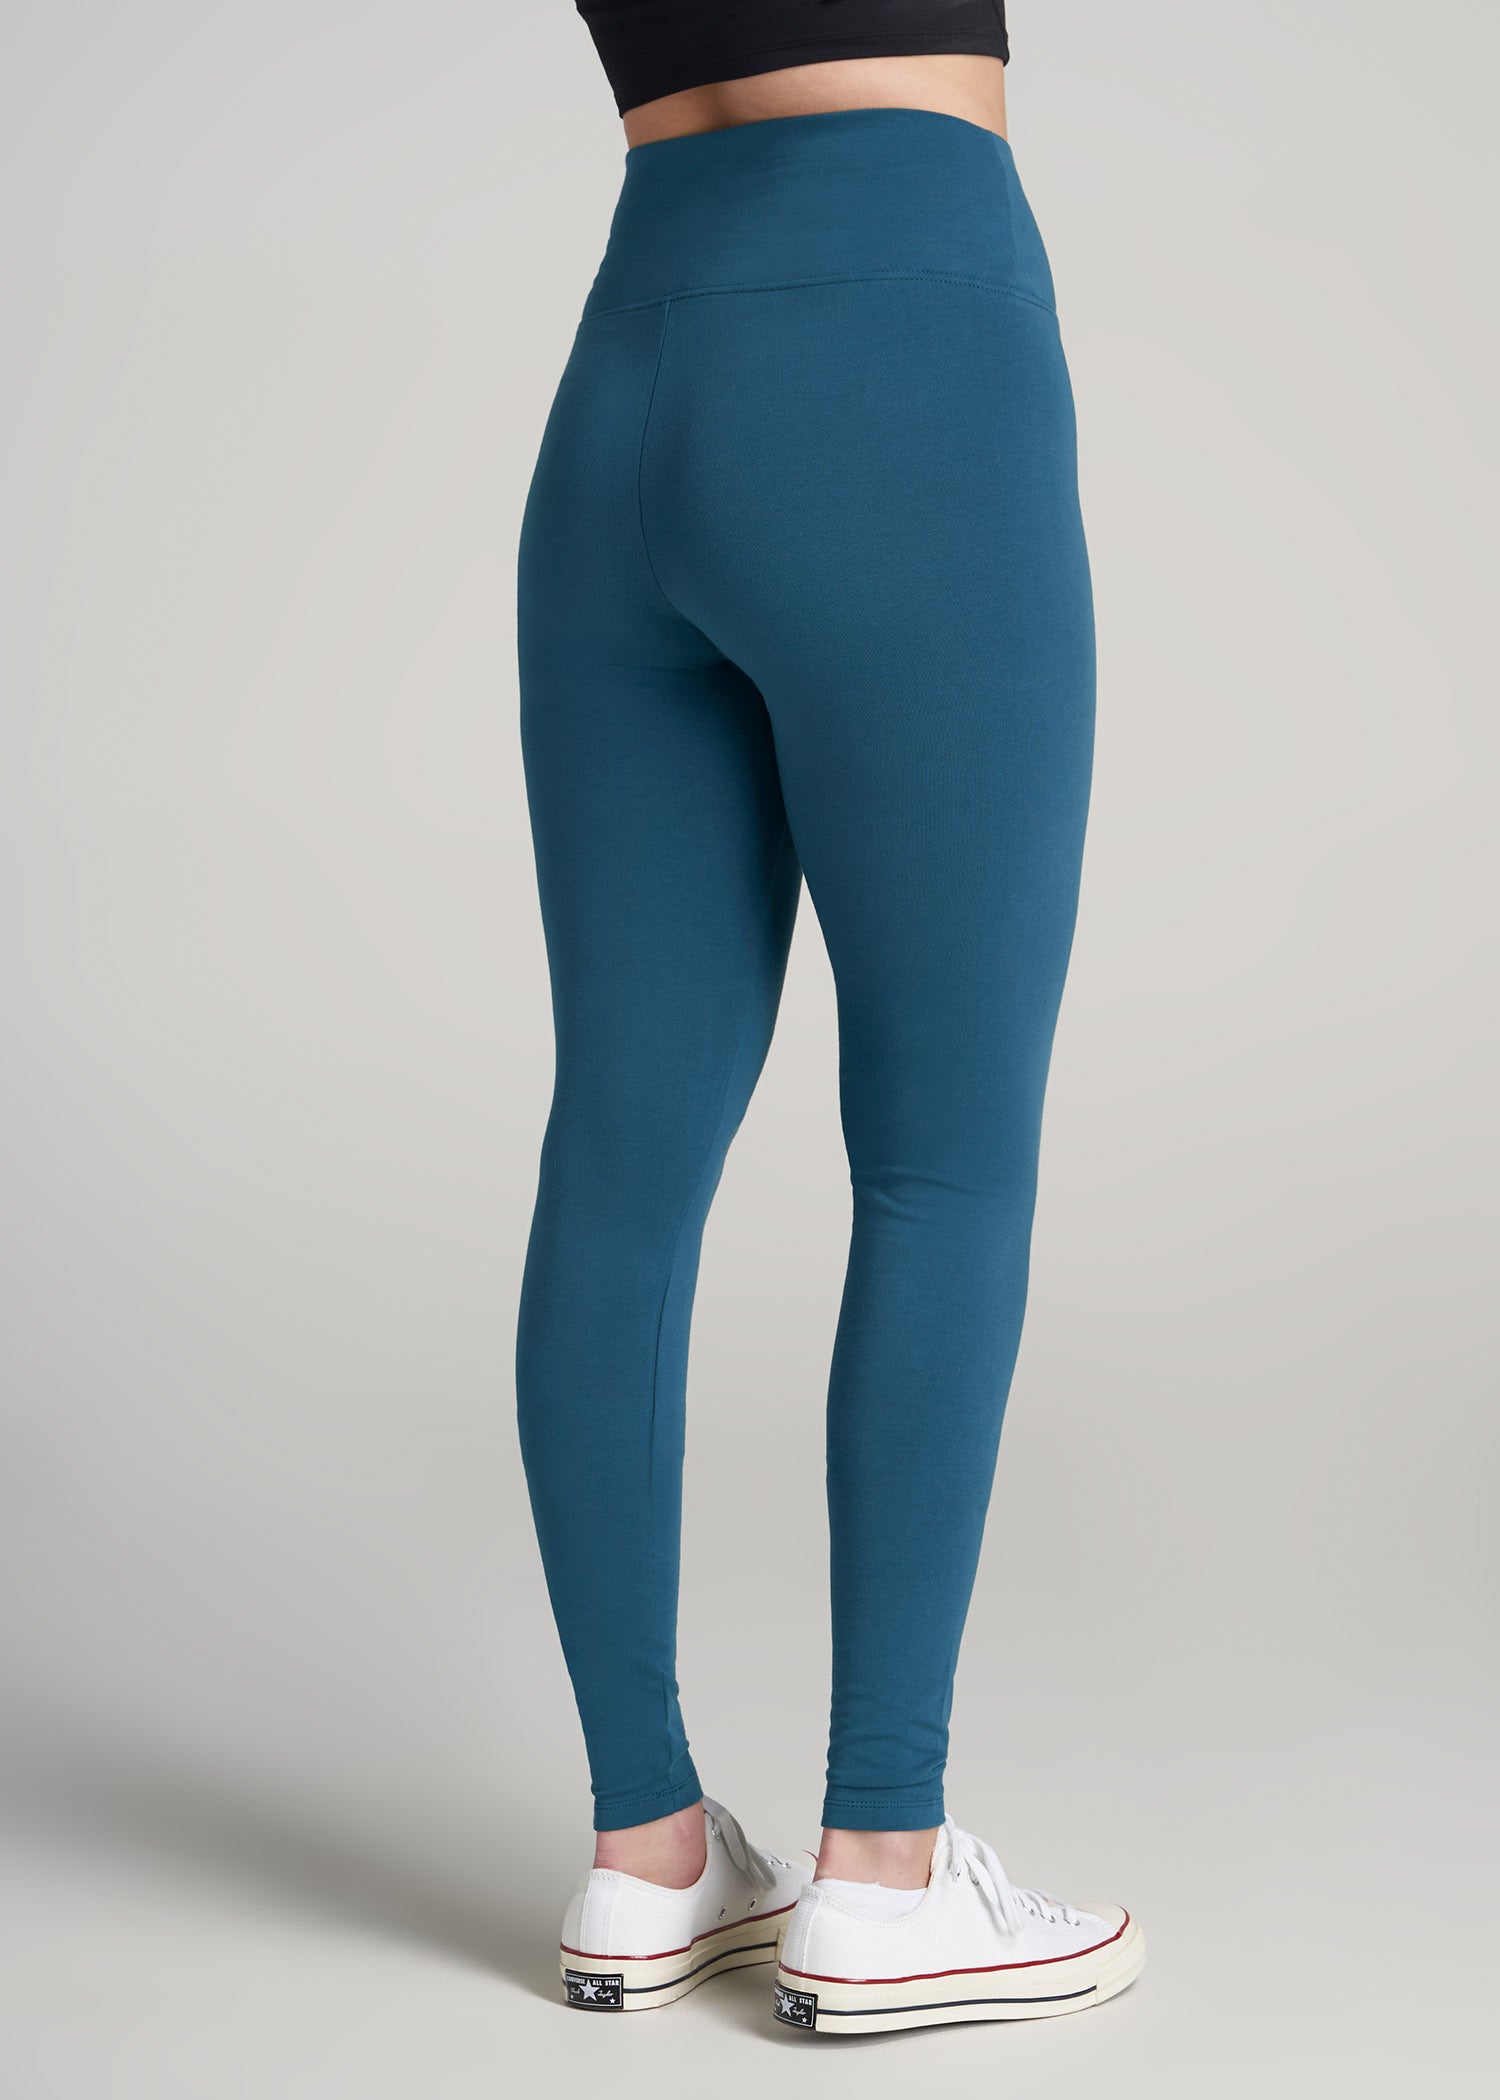 Nike Bodysuits for Women - Poshmark